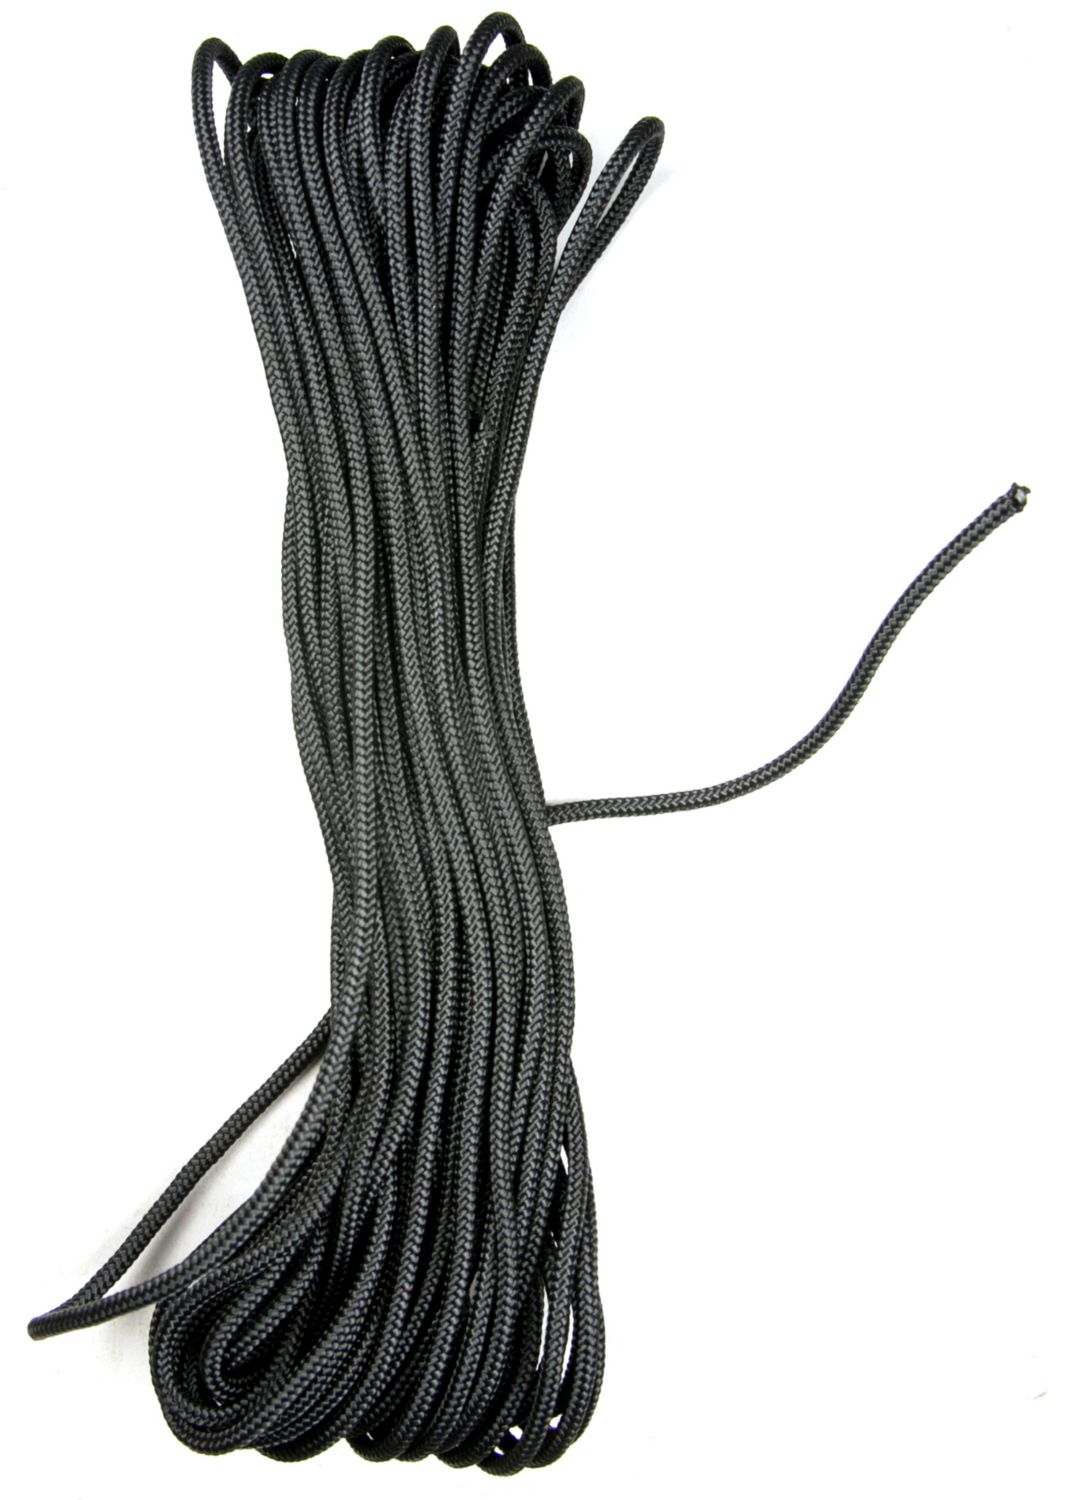 black nylon rope